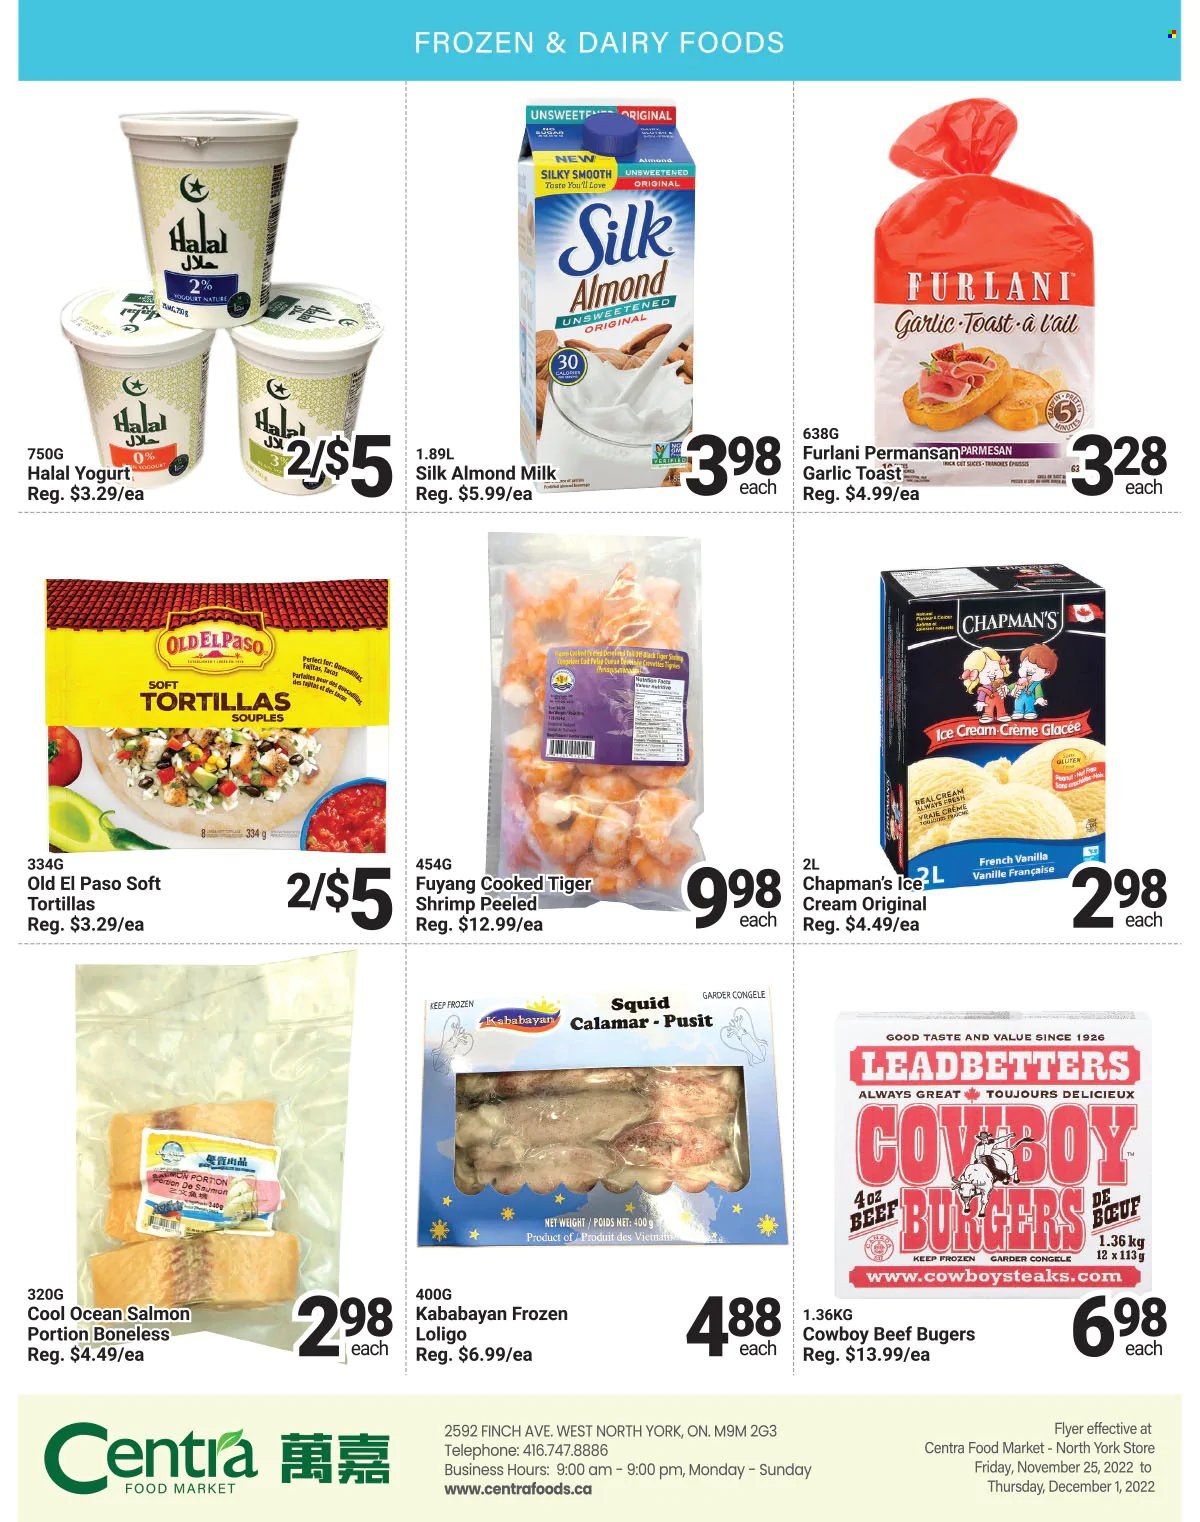 thumbnail - Centra Food Market Flyer - November 25, 2022 - December 01, 2022 - Sales products - tortillas, Old El Paso, salmon, squid, shrimps, hamburger, parmesan, yoghurt, almond milk, milk, ice cream, sugar. Page 3.